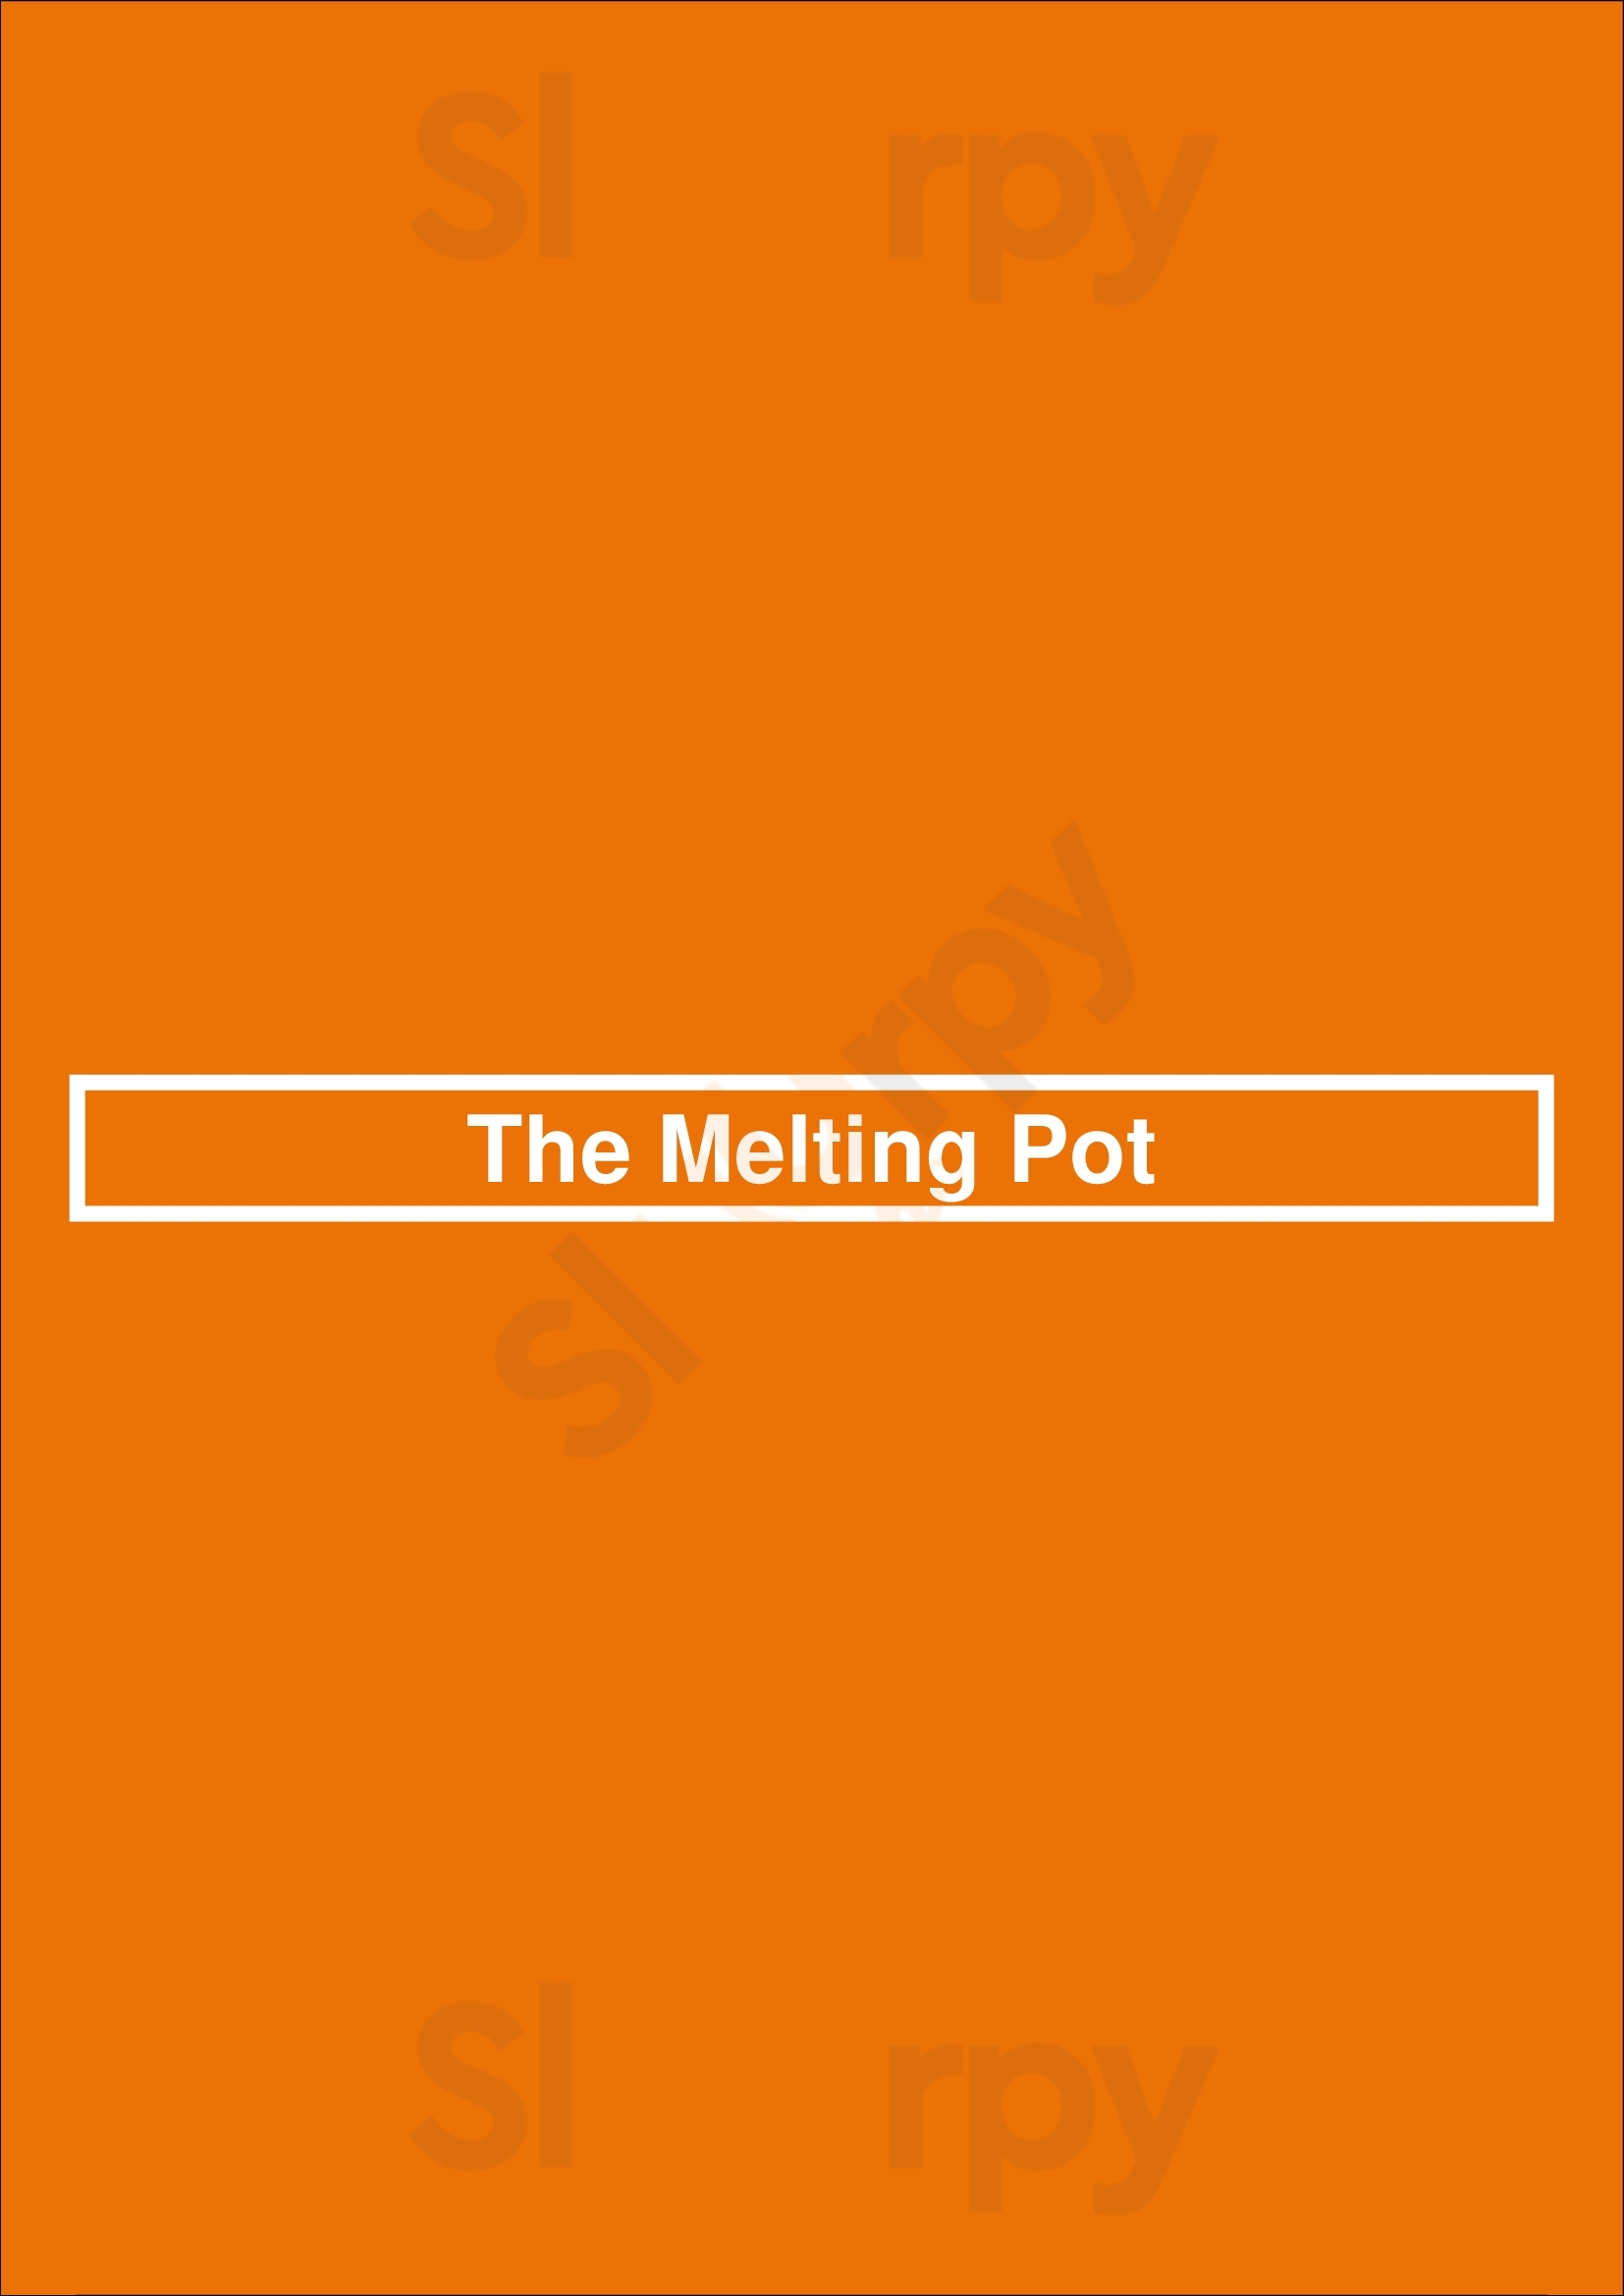 The Melting Pot Indianapolis Menu - 1